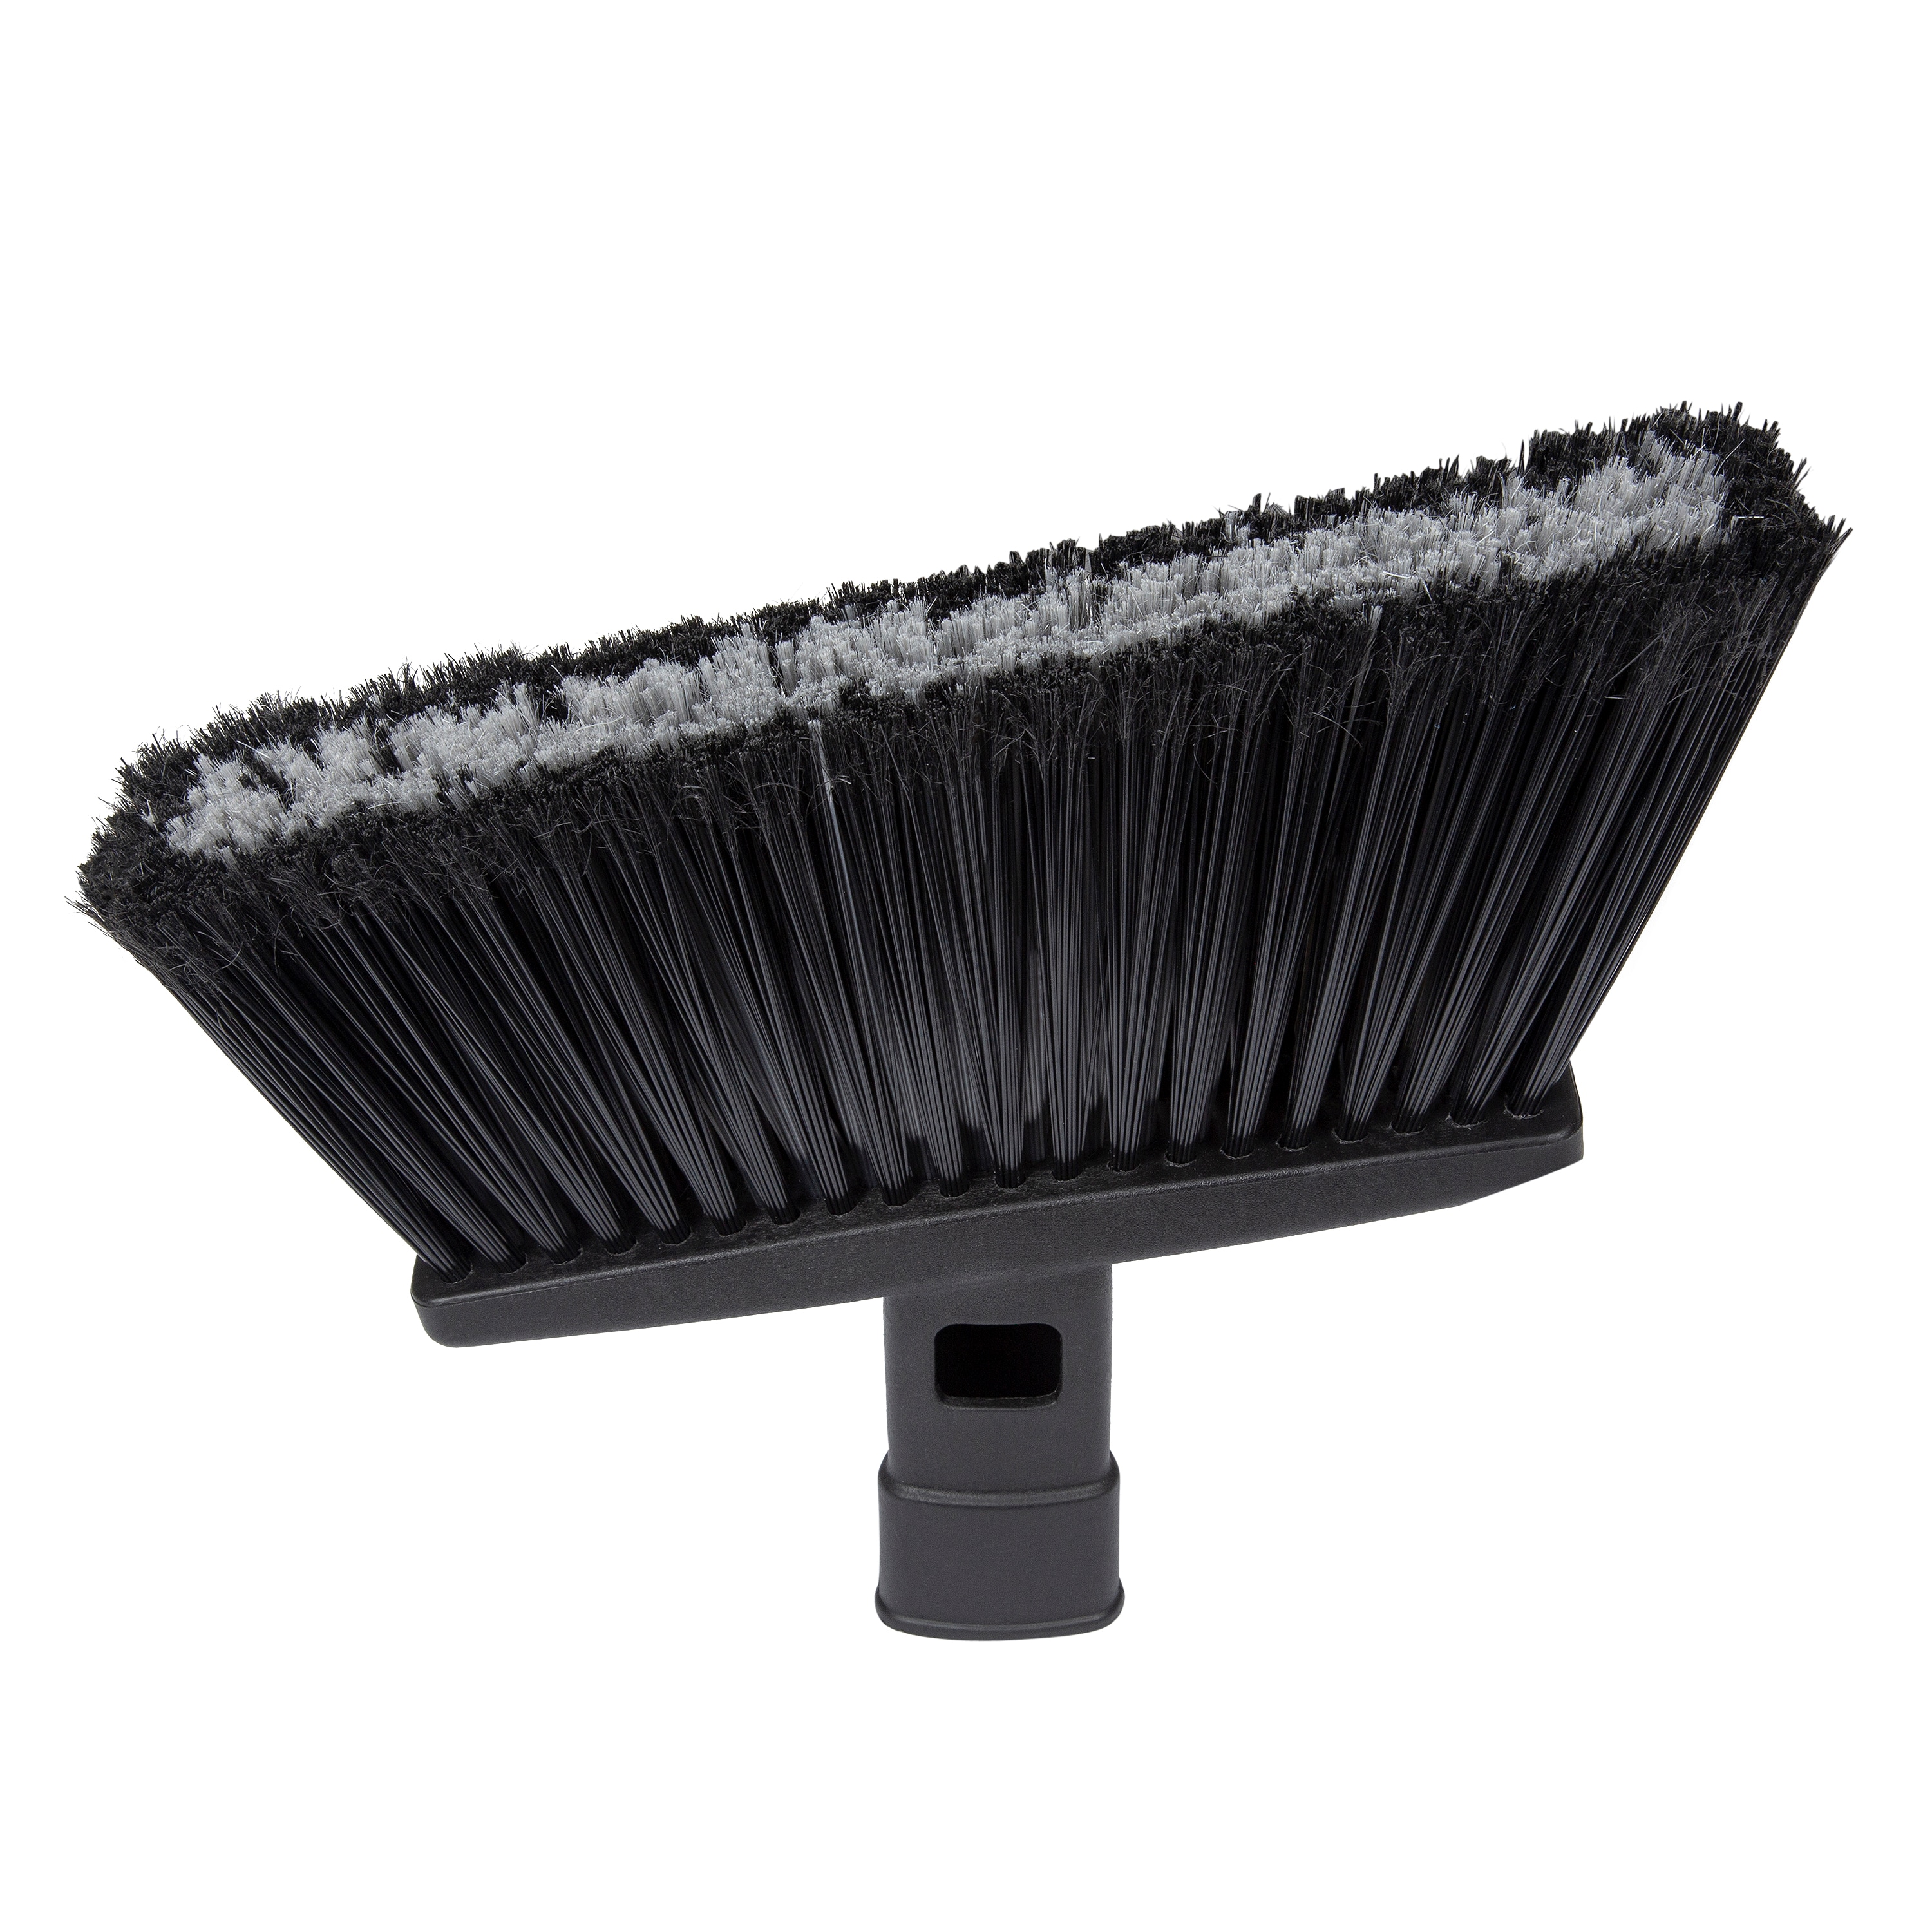 SWOPT Premium Straight Broom + 48 Eva Foam Comfort Grip Wooden Handle, Combo — Cleaning Head with Long Handle Interchangeable with All SWOPT